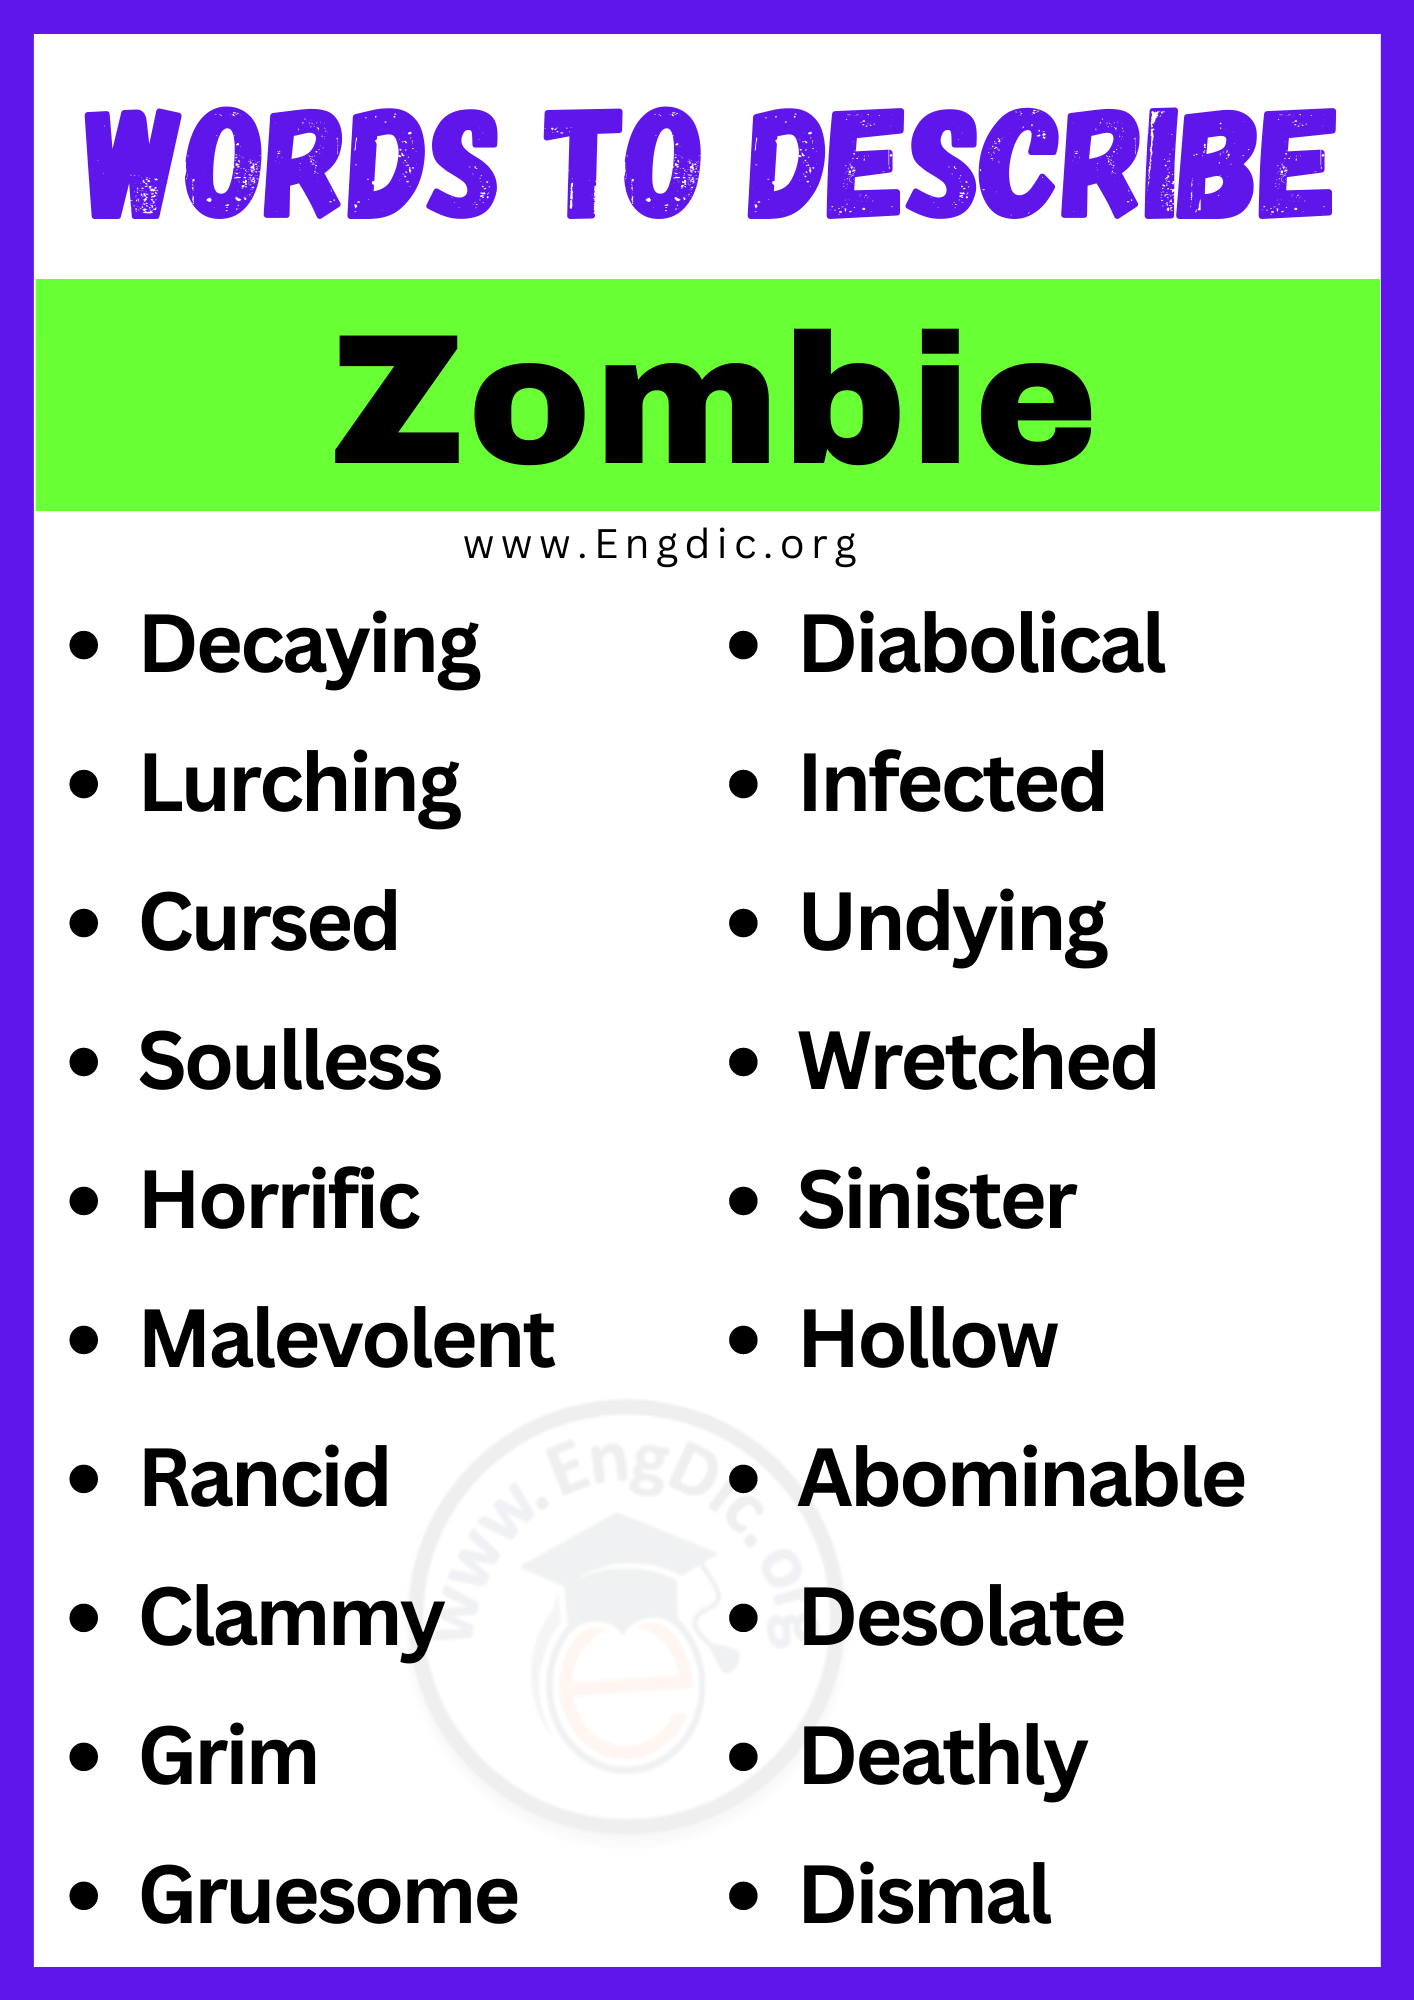 Words to Describe Zombie